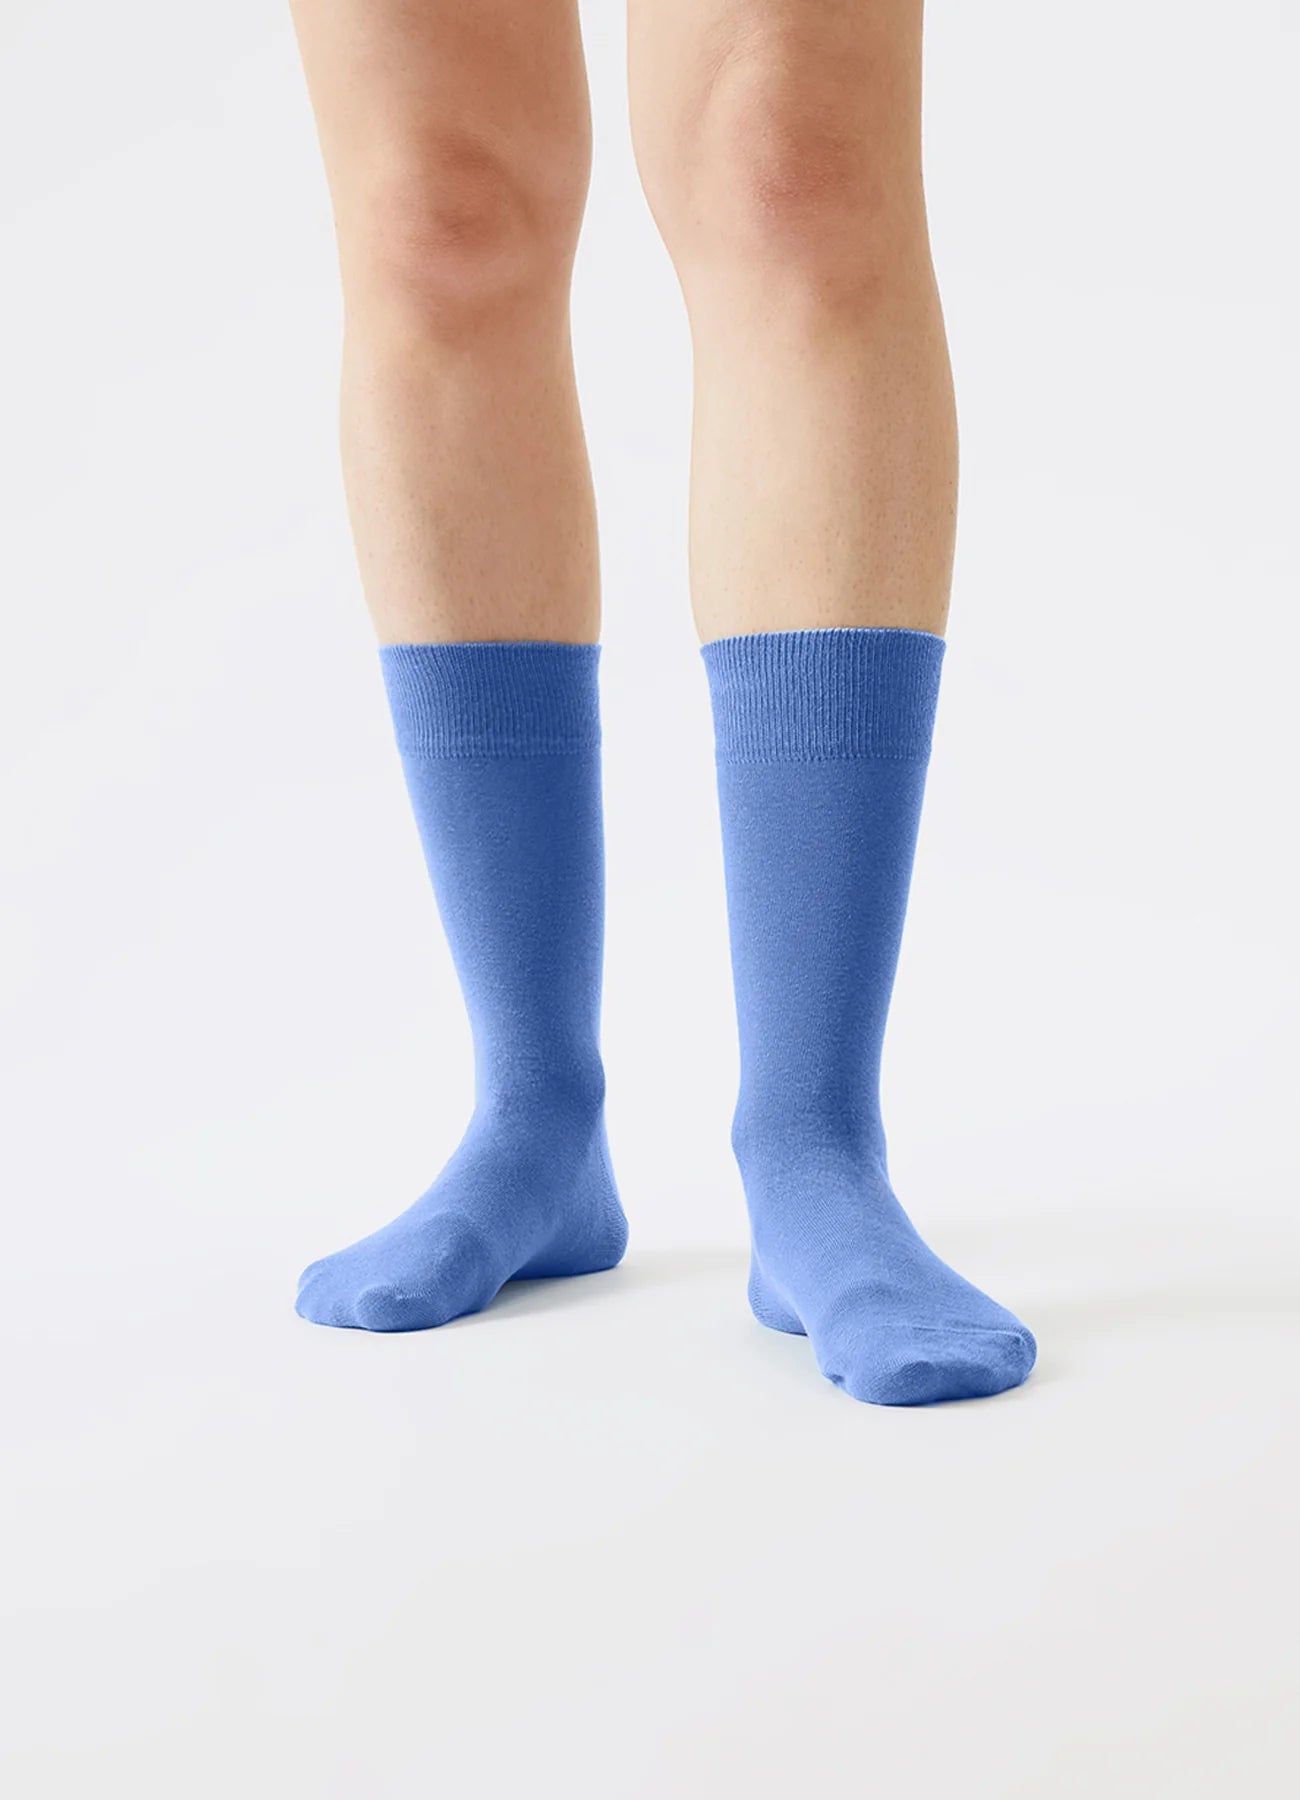 VON JUNGFELD BERMUDA Socken, blau